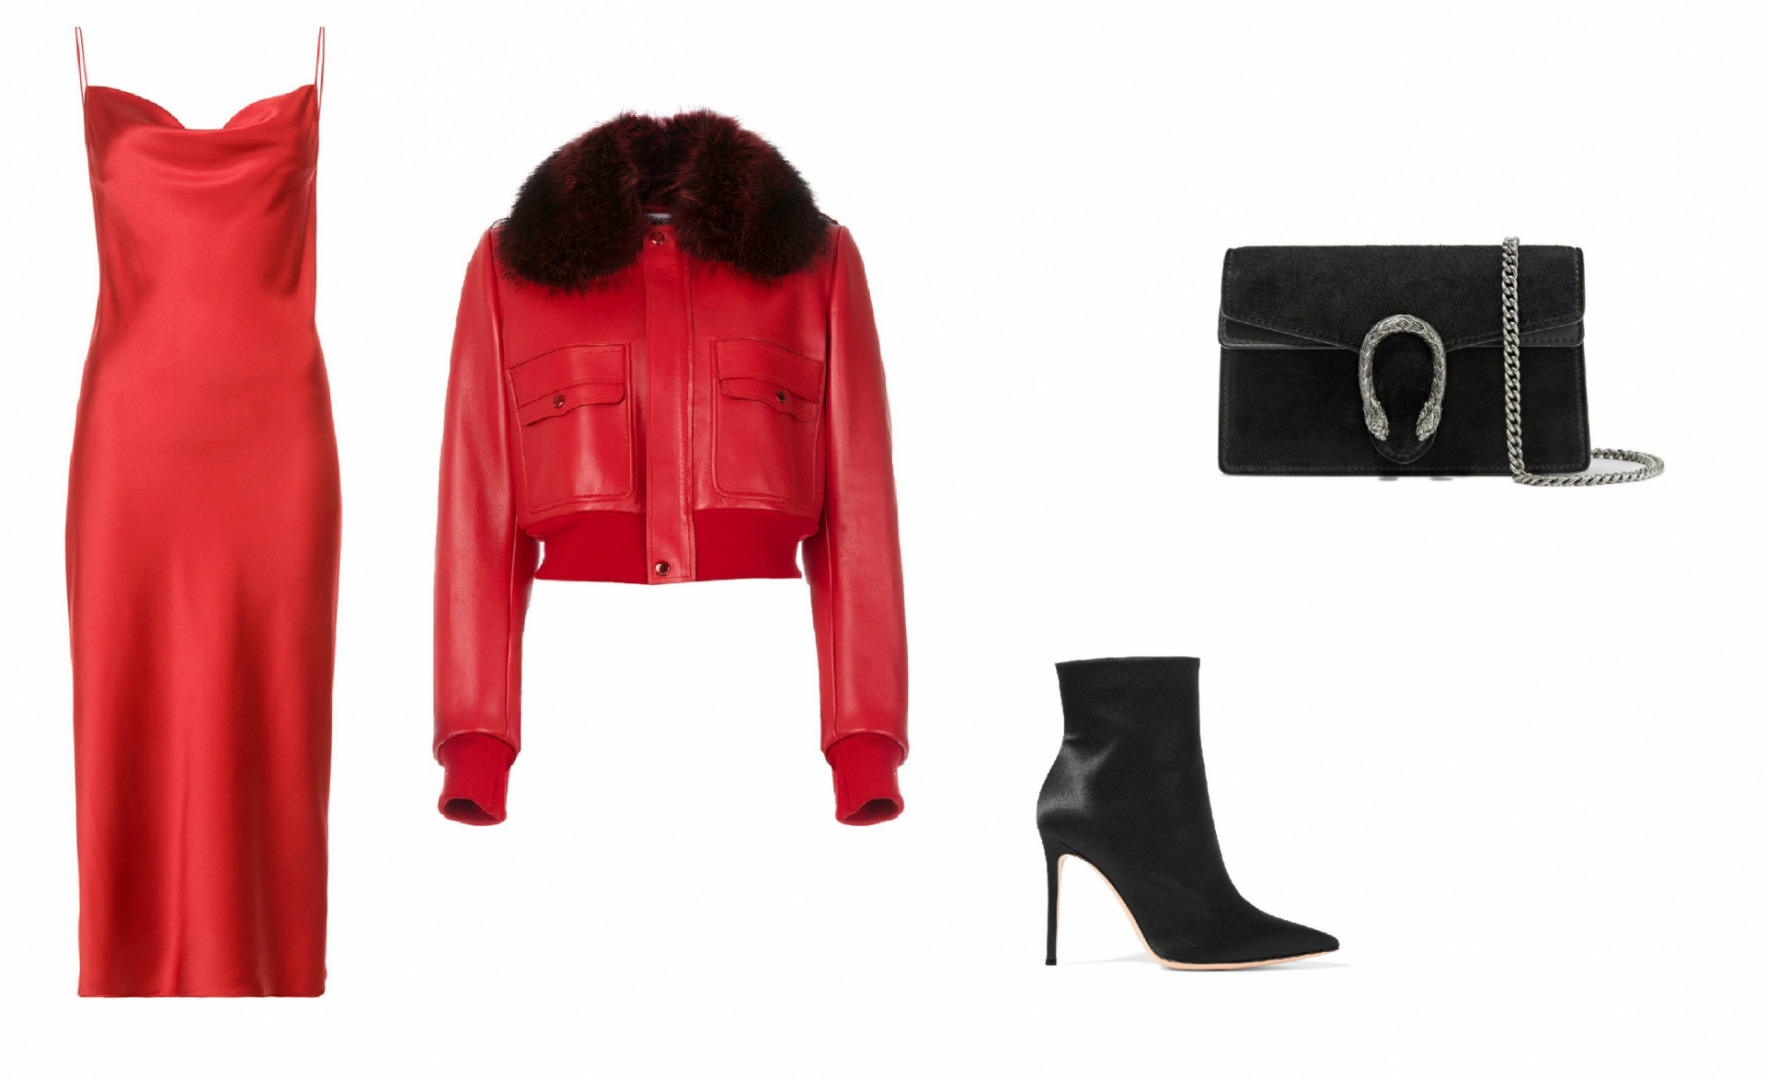 Ceket: Givenchy Elbise: Fleur Du Mal Ayakkabı: Gianvito Rossi Çanta: Gucci